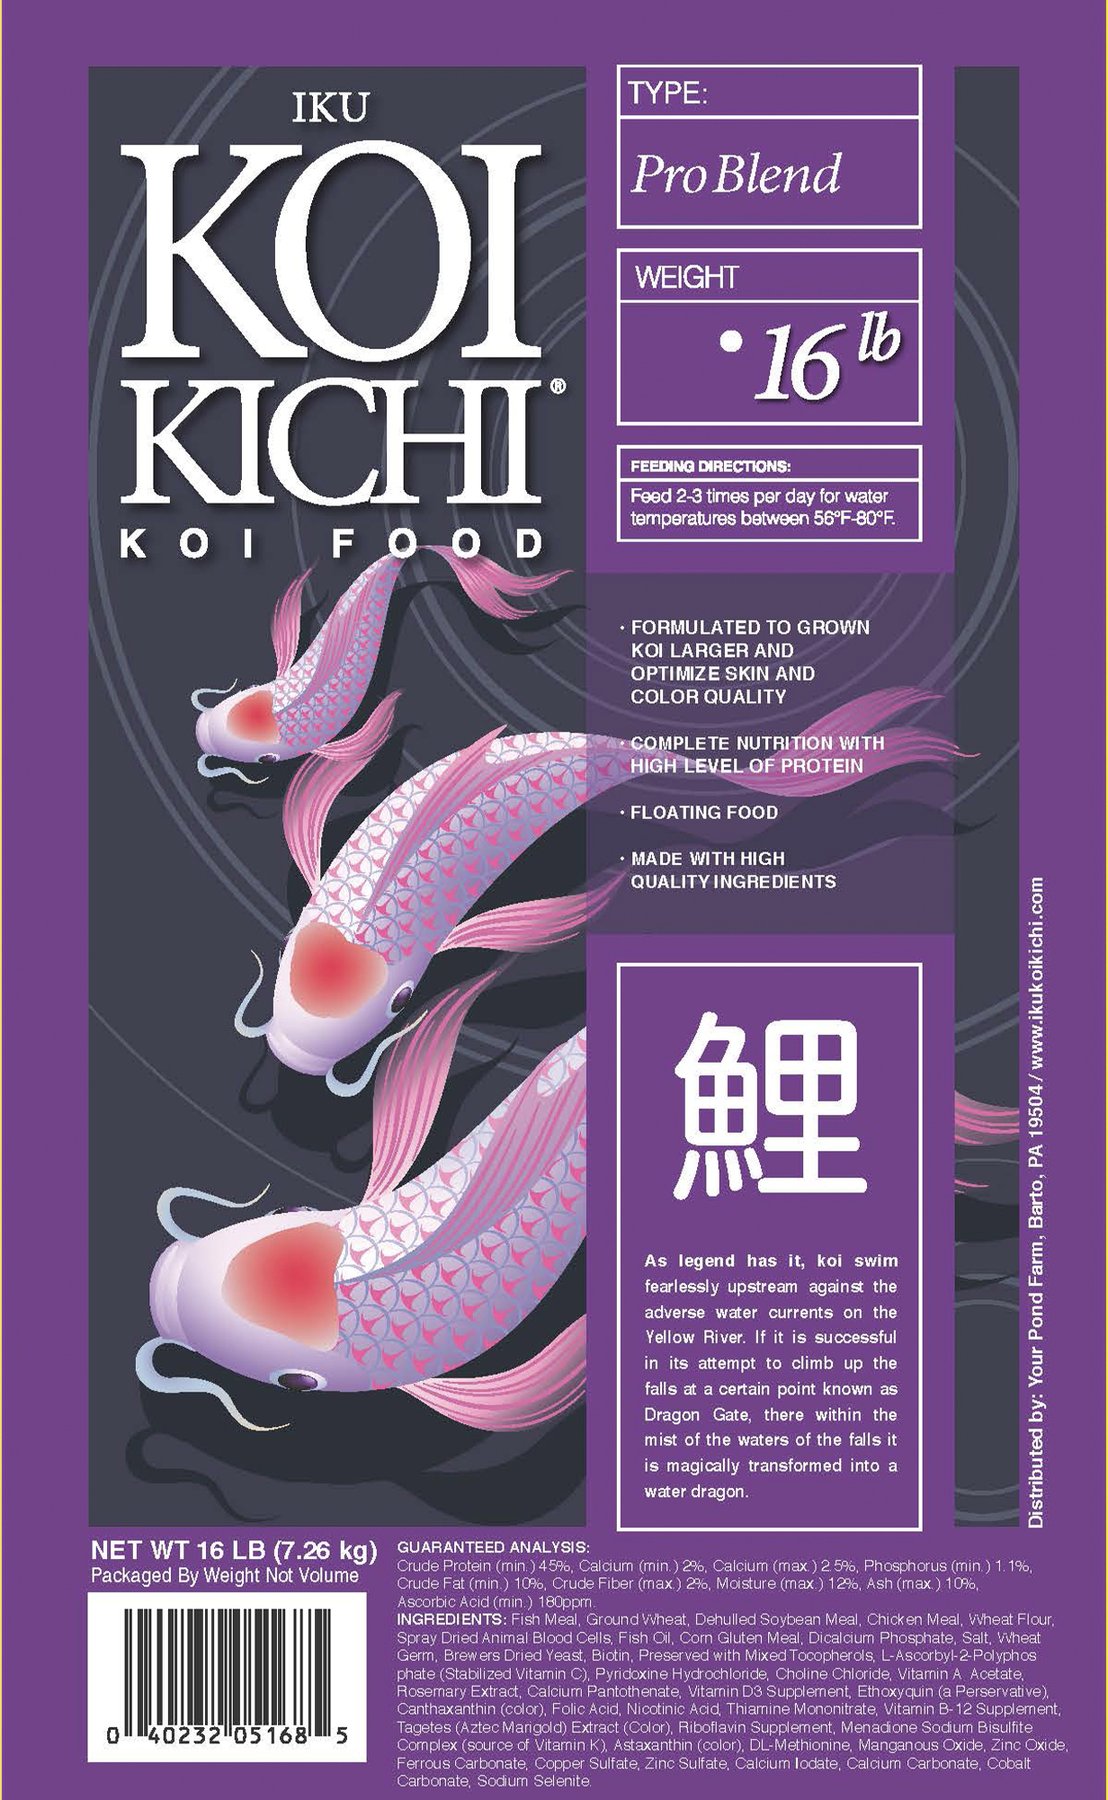 Iku Koi Kichi Pro Blend Koi Fish Food - 16 lbs. (Bucket)